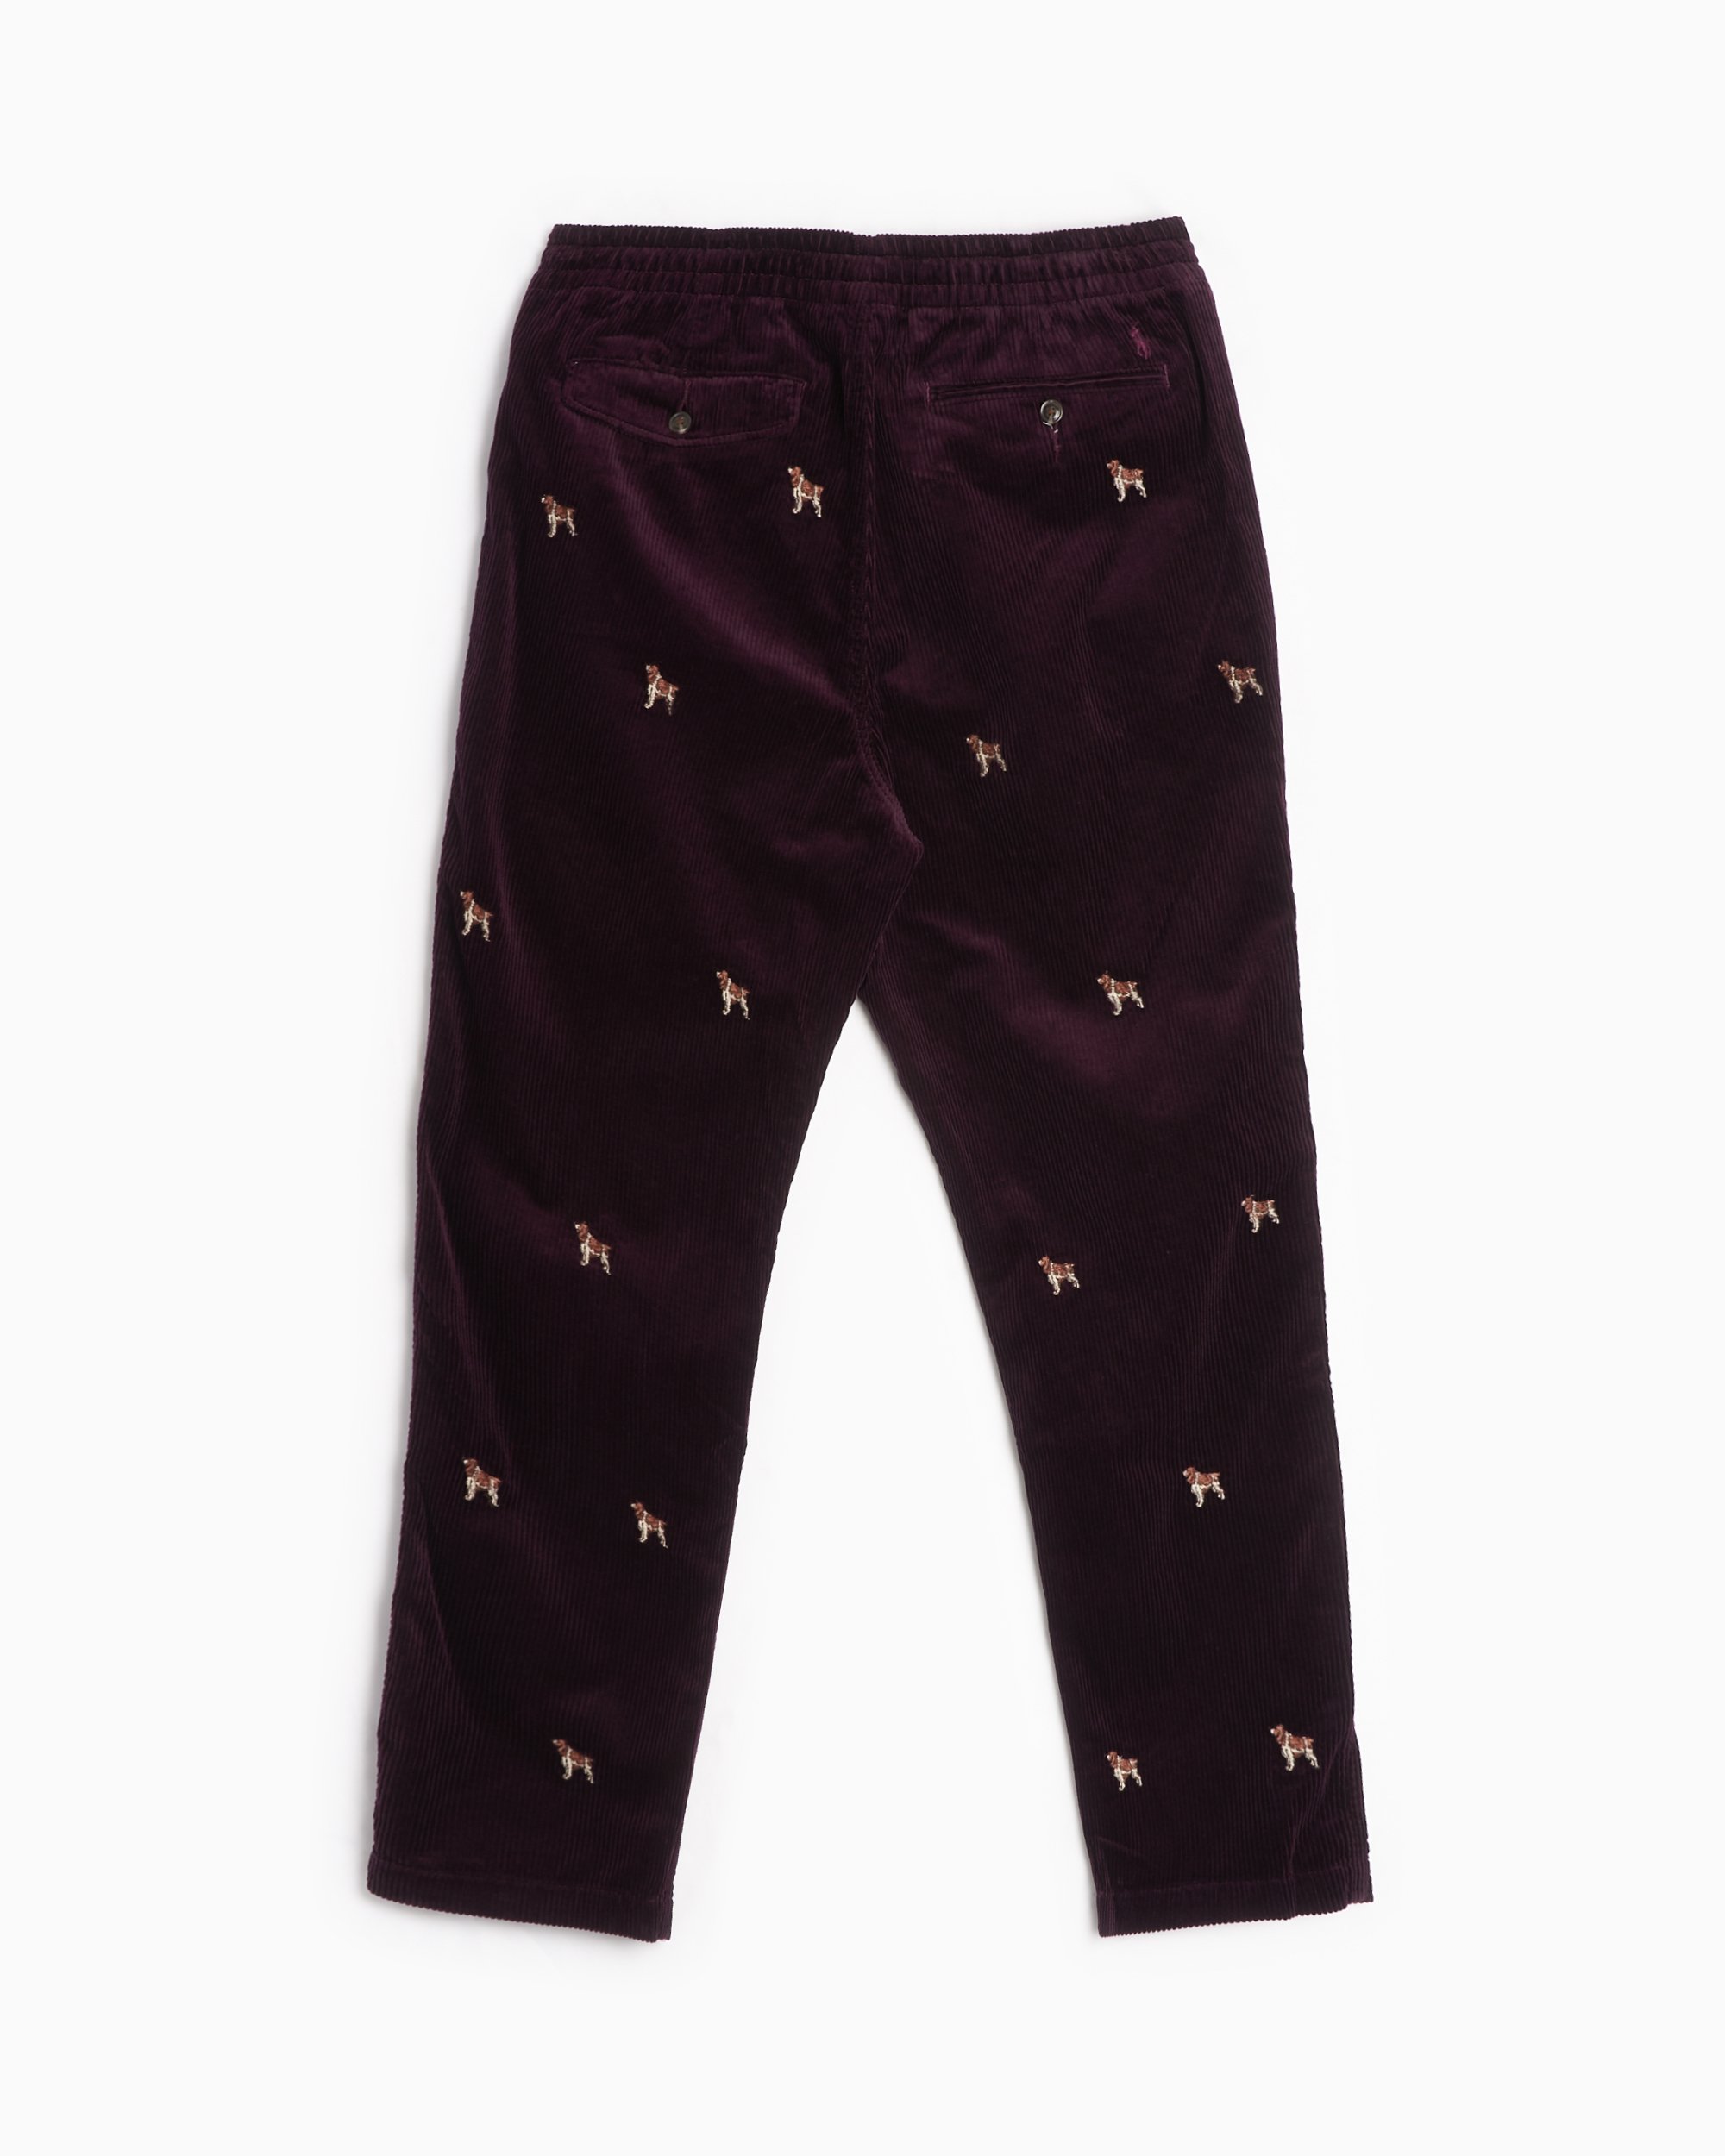 Polo Ralph Lauren Men's Prepster Flat Front Pants Violeta 710917126001